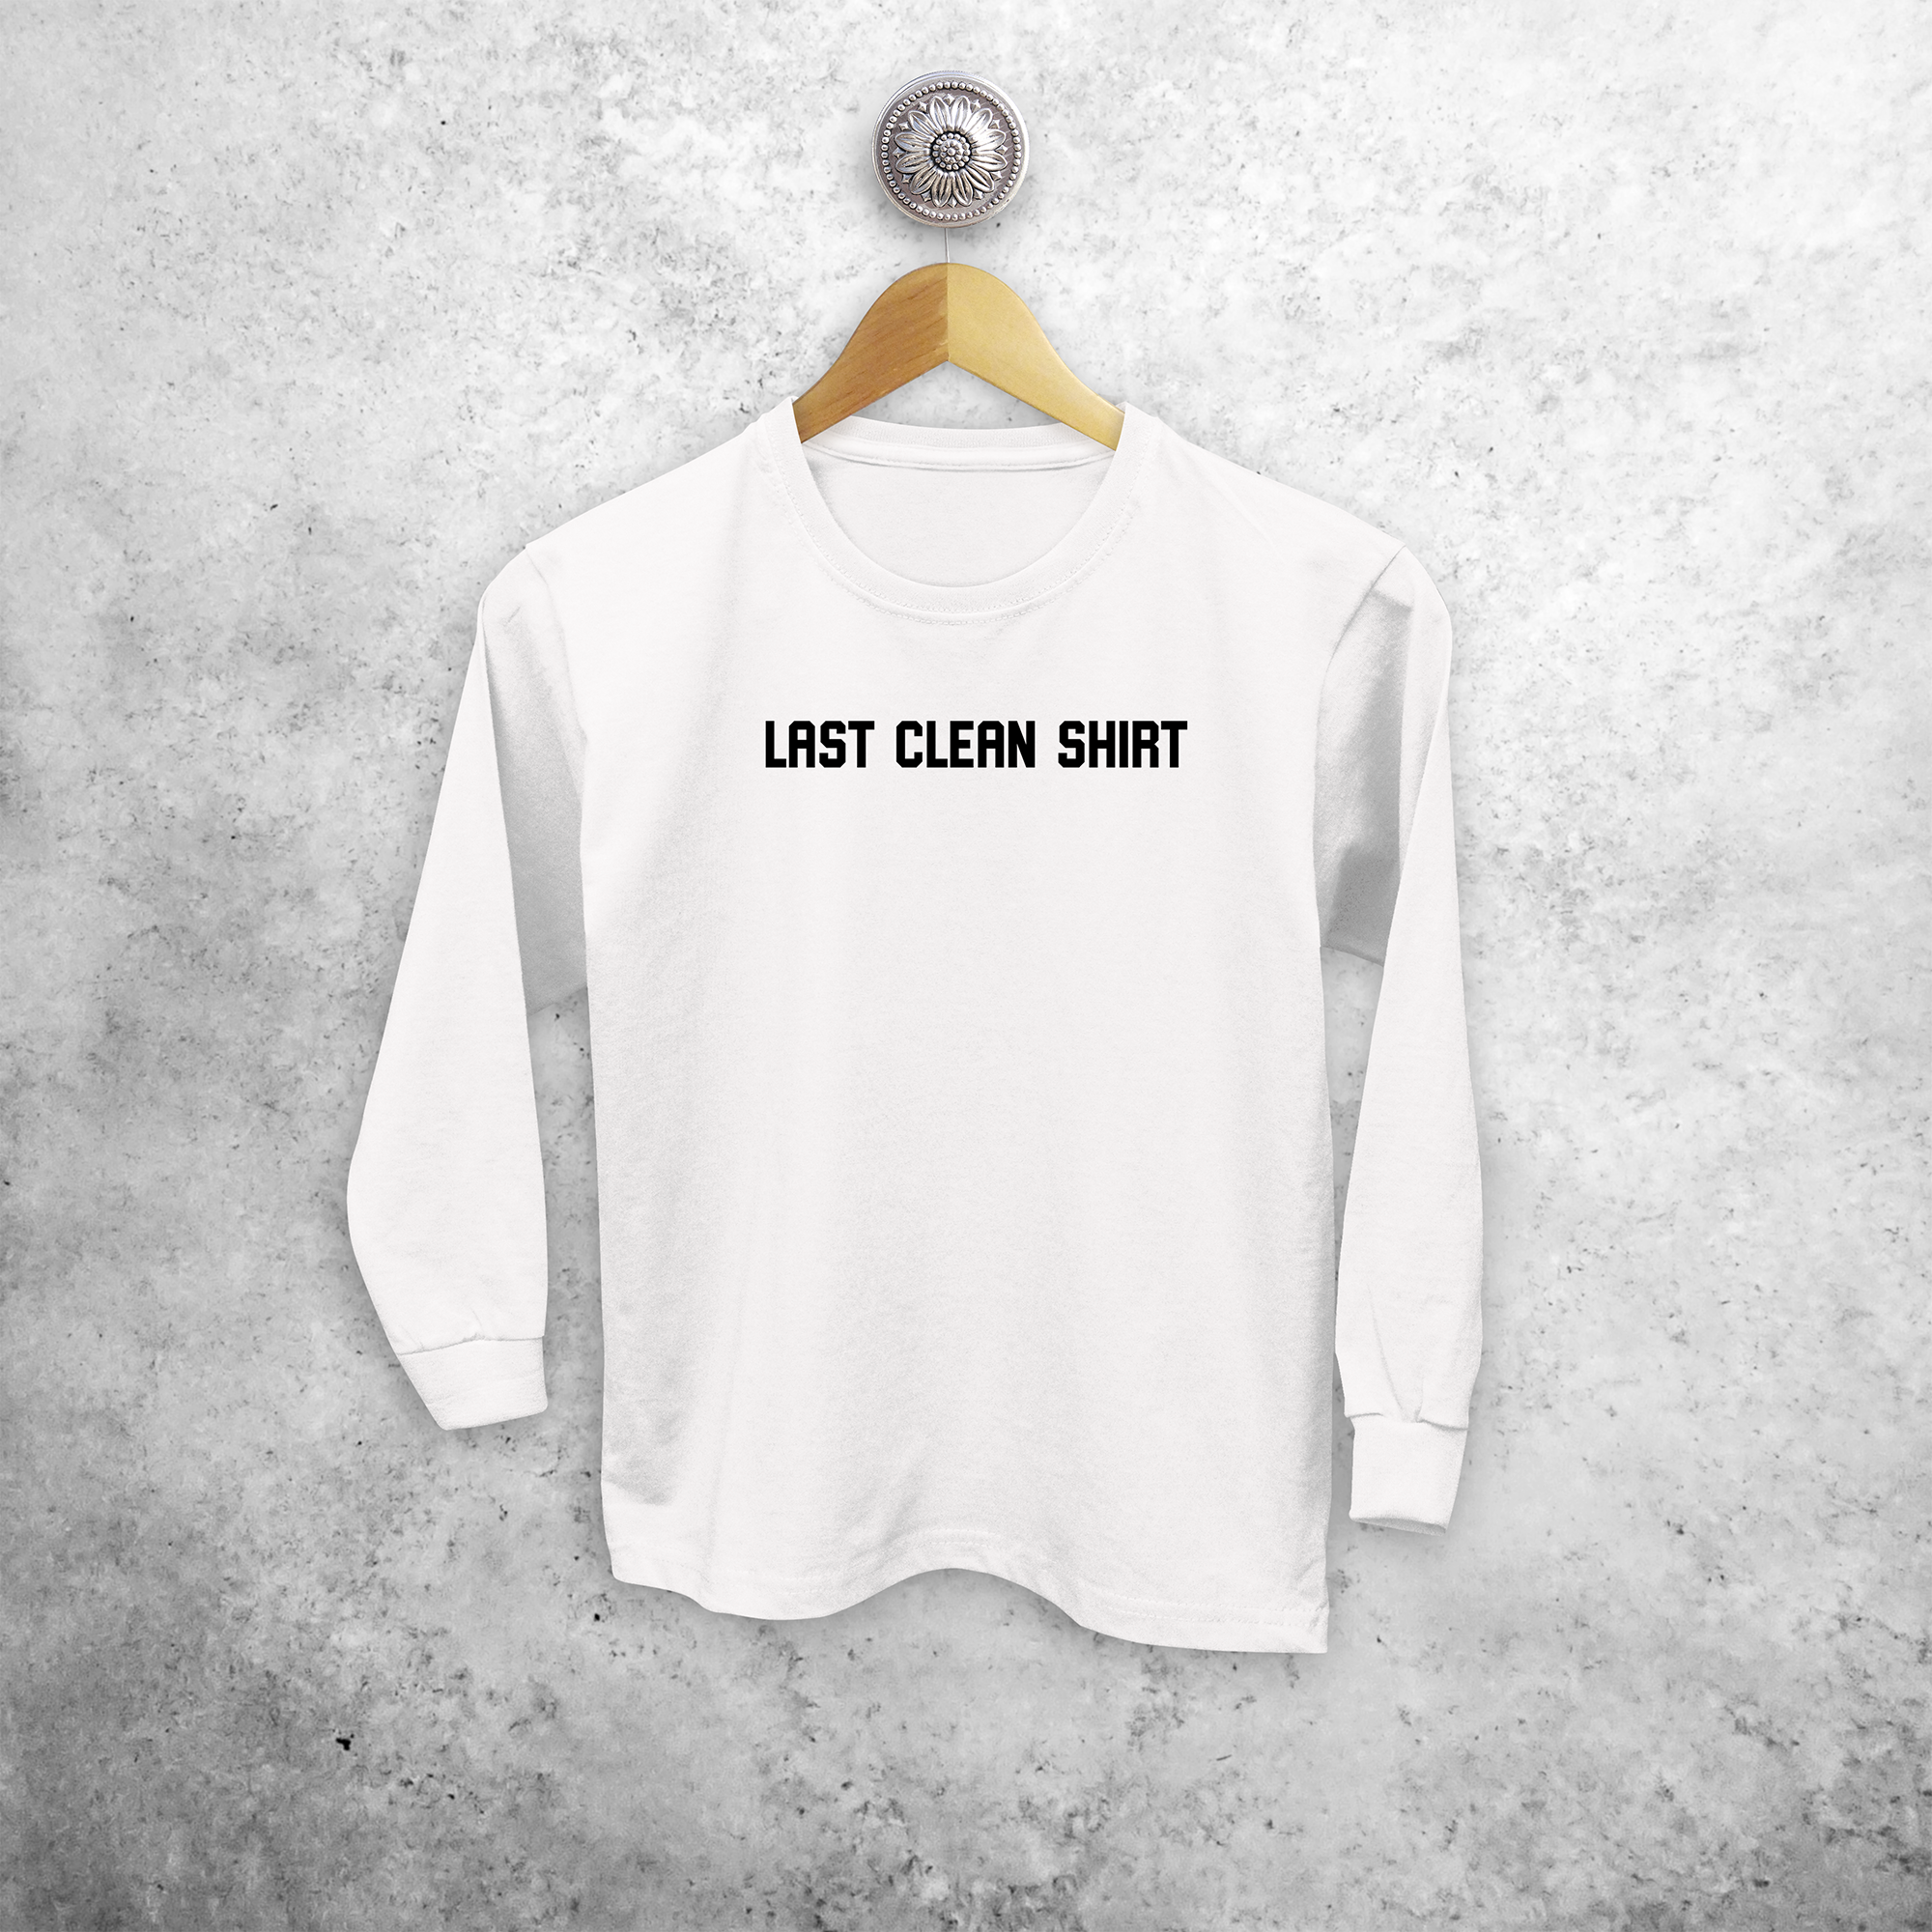 'Last clean shirt' kids longsleeve shirt